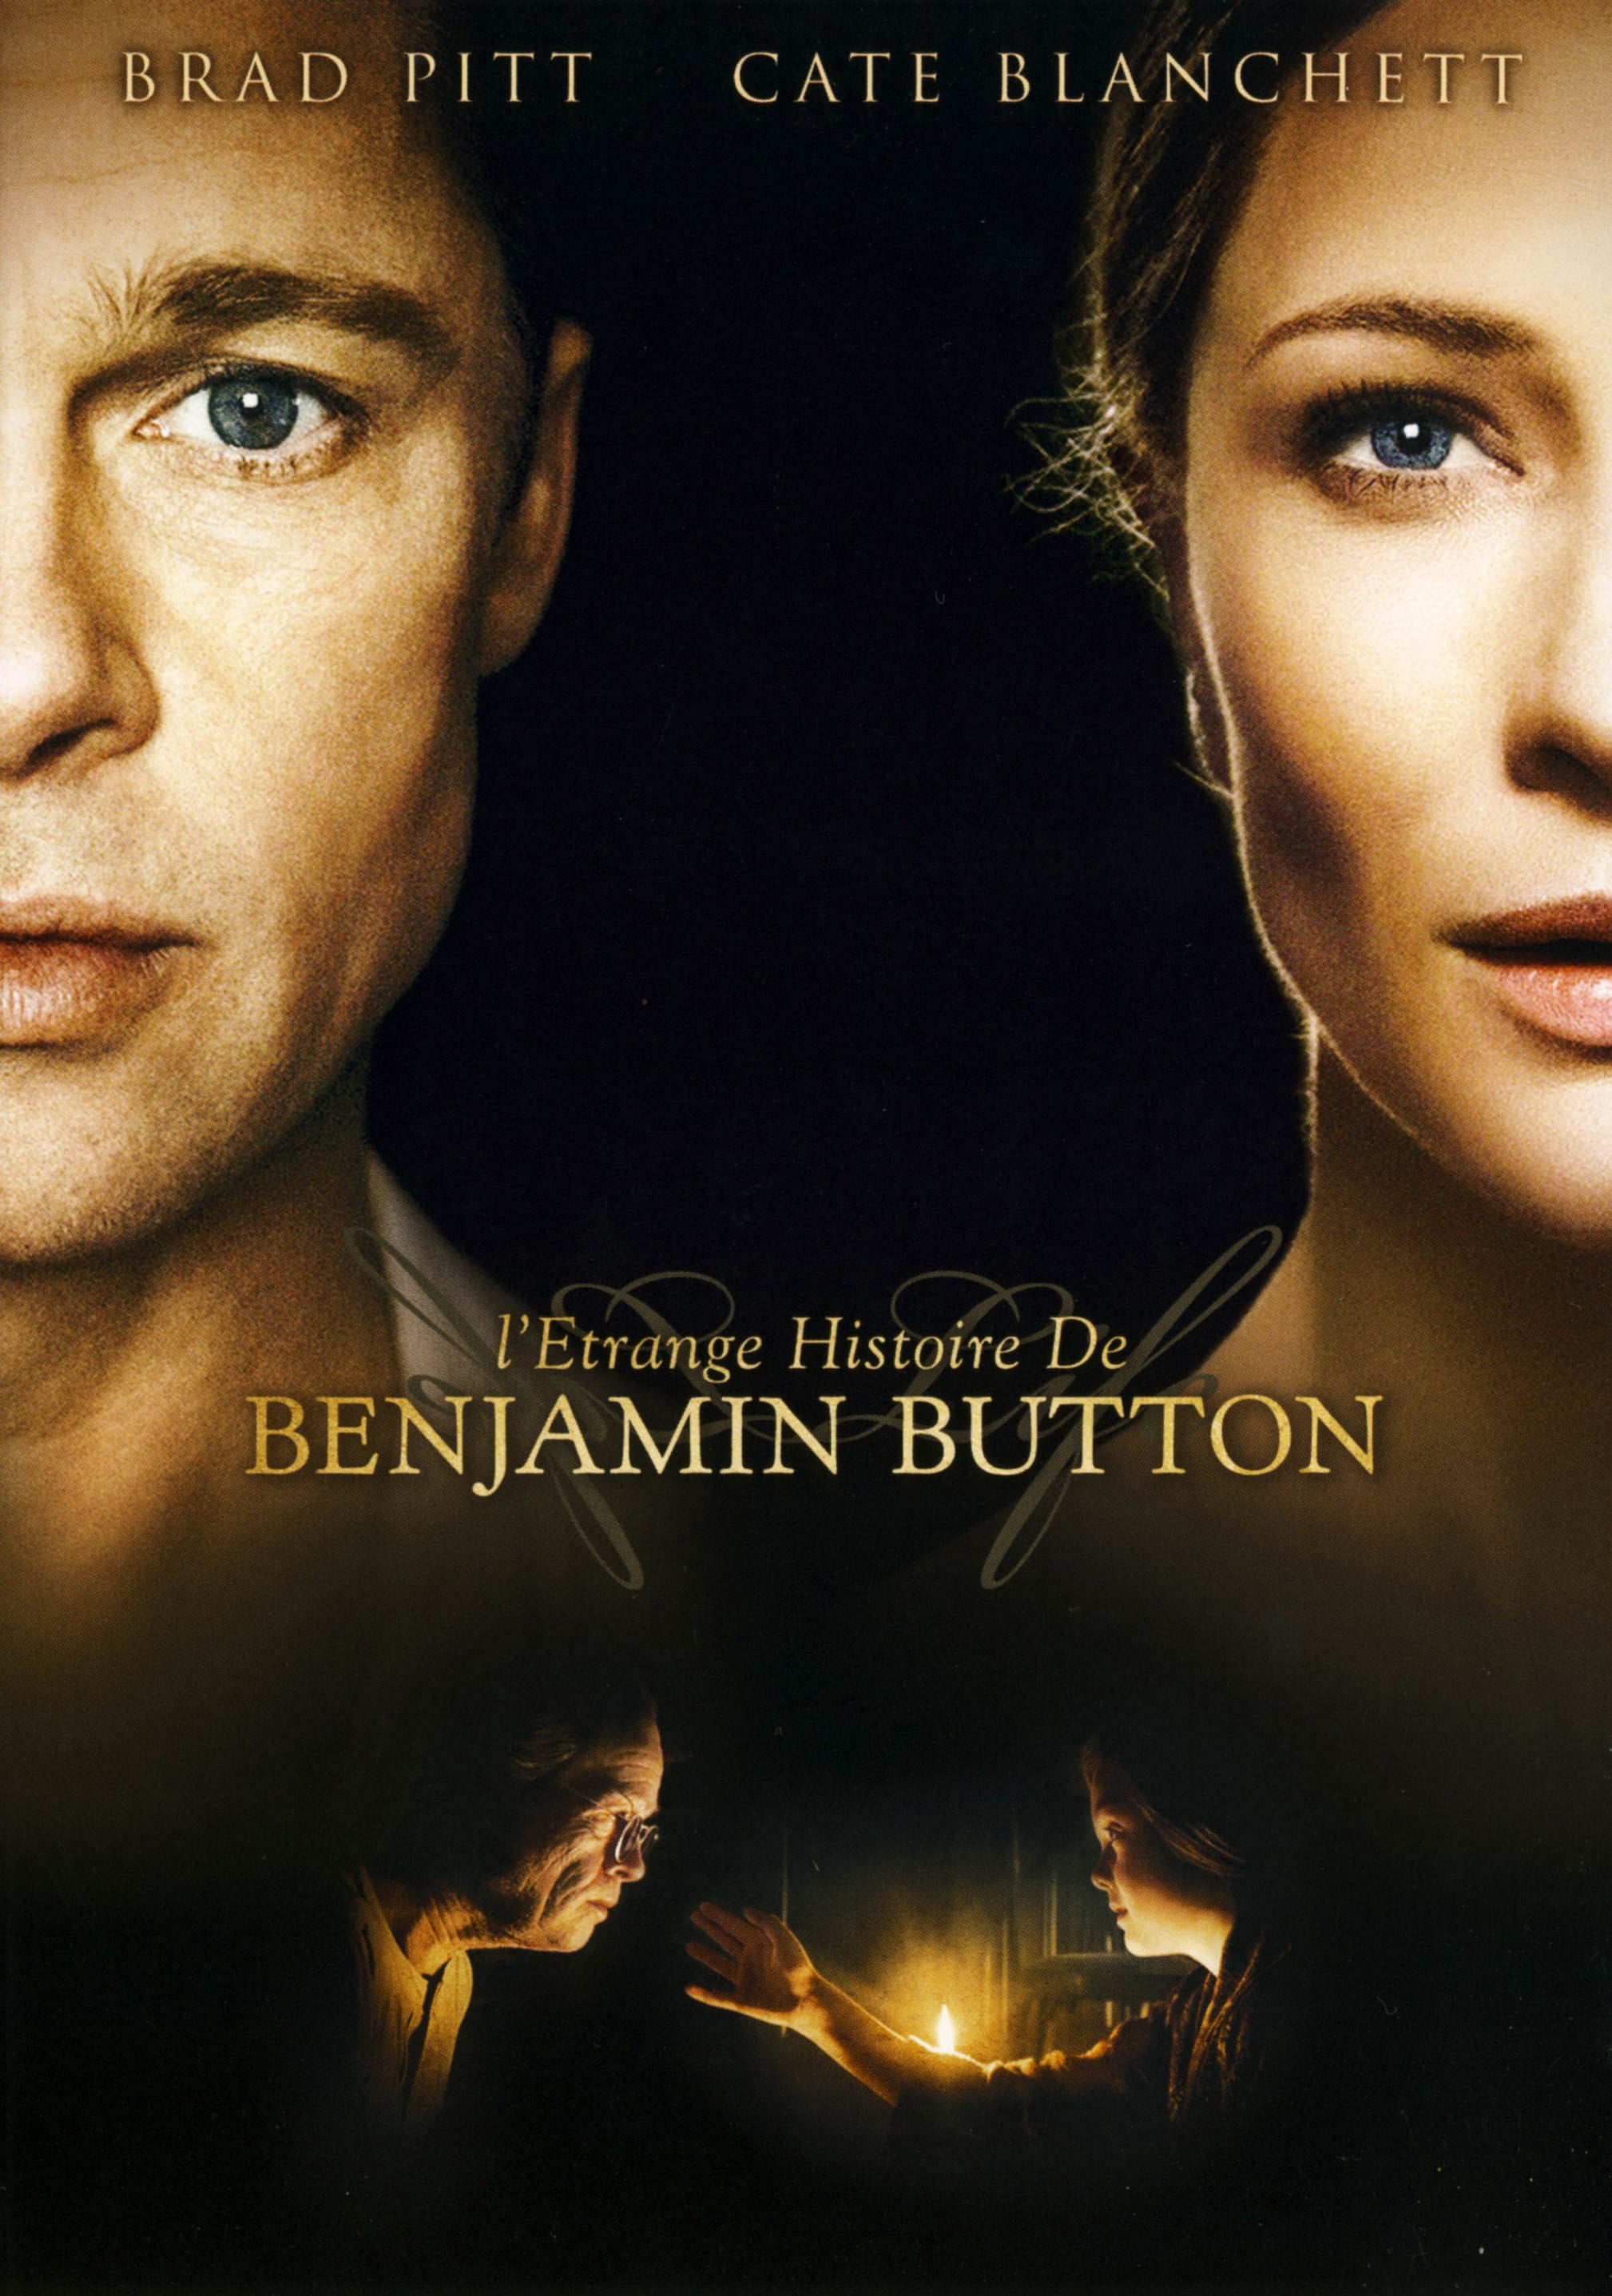 Stiahni si HD Filmy  	Podivuhodny pripad Benjamina Buttona / The Curious Case of Benjamin Button (2008)(CZ/EN)[1080p][HEVC] = CSFD 84%